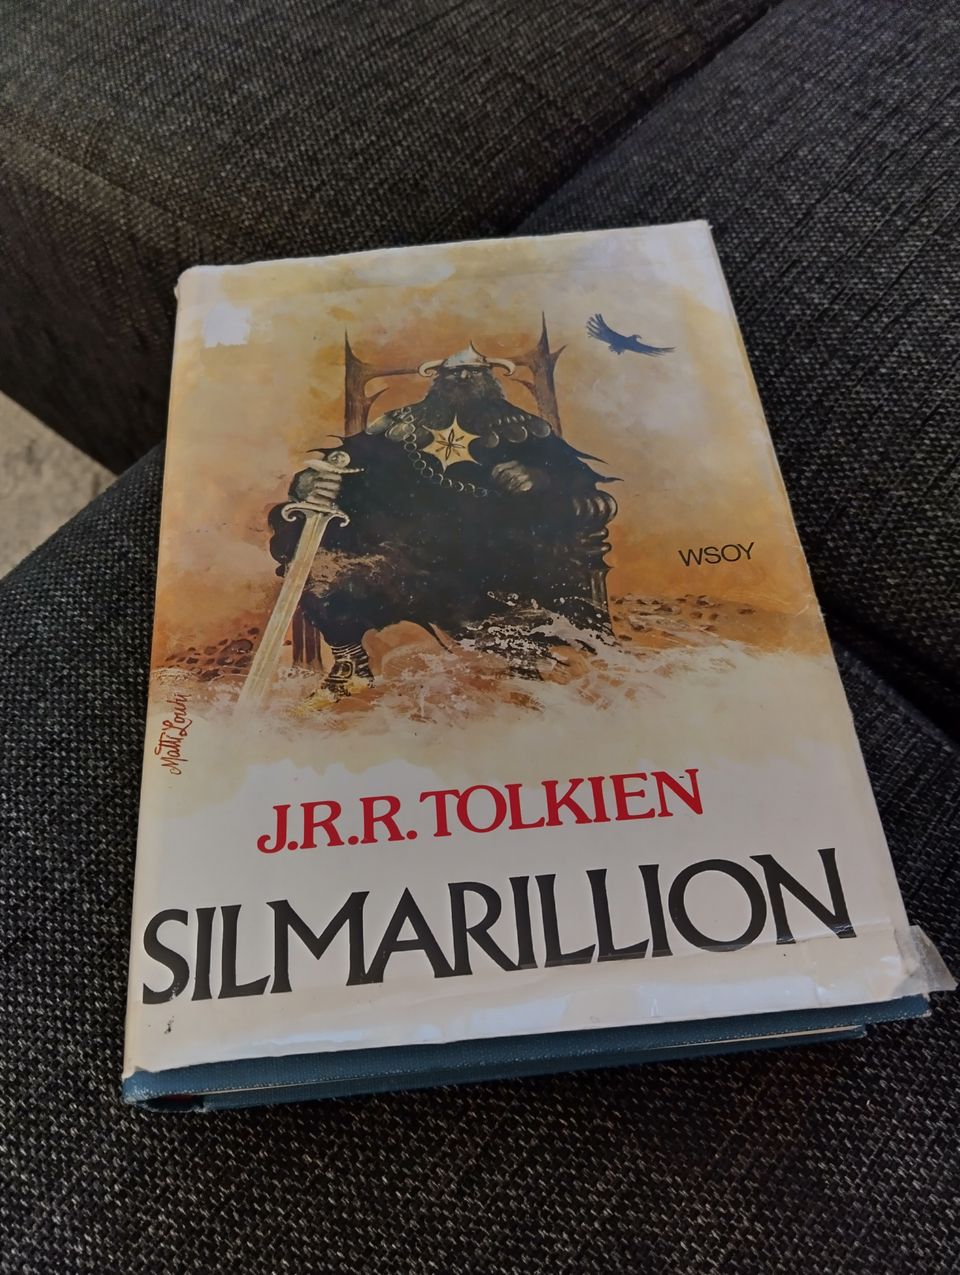 J.R.R Tolkien - Silmarillion